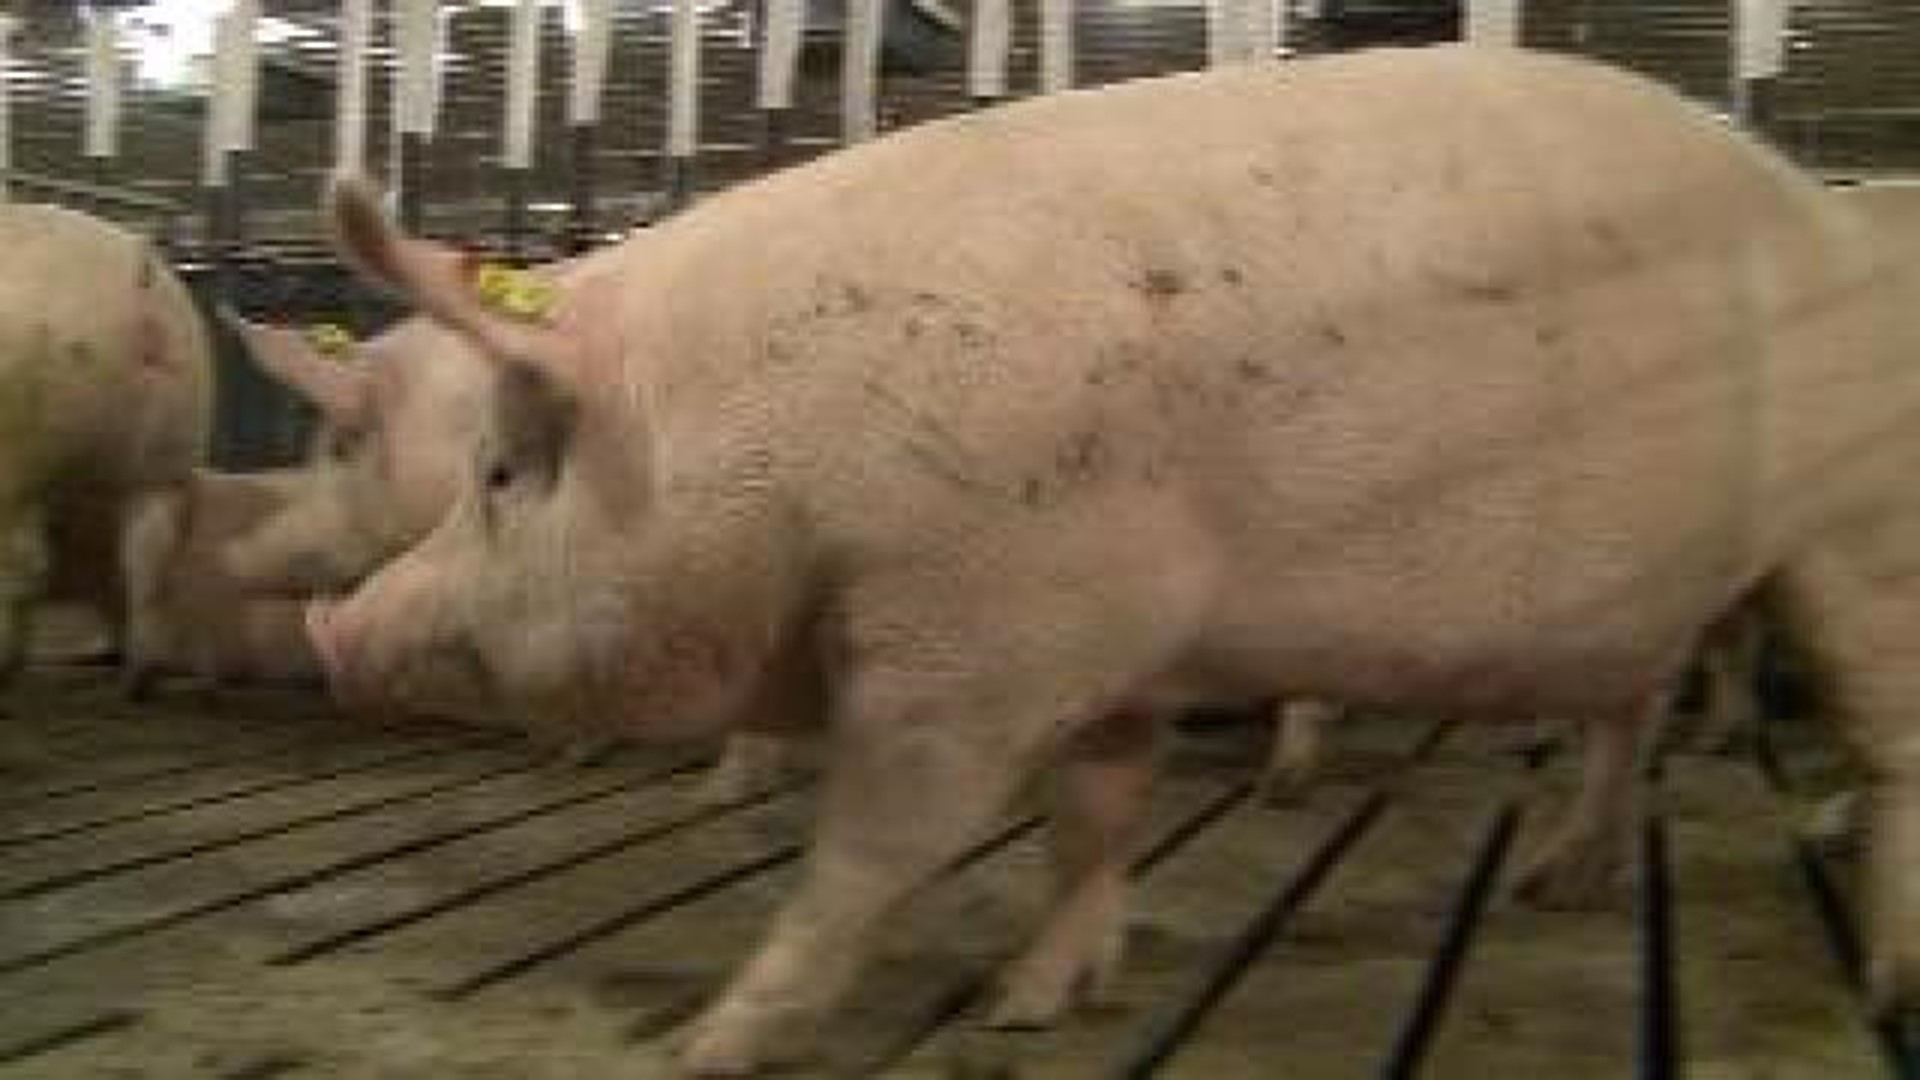 Hog Farm Owner Speaks Out